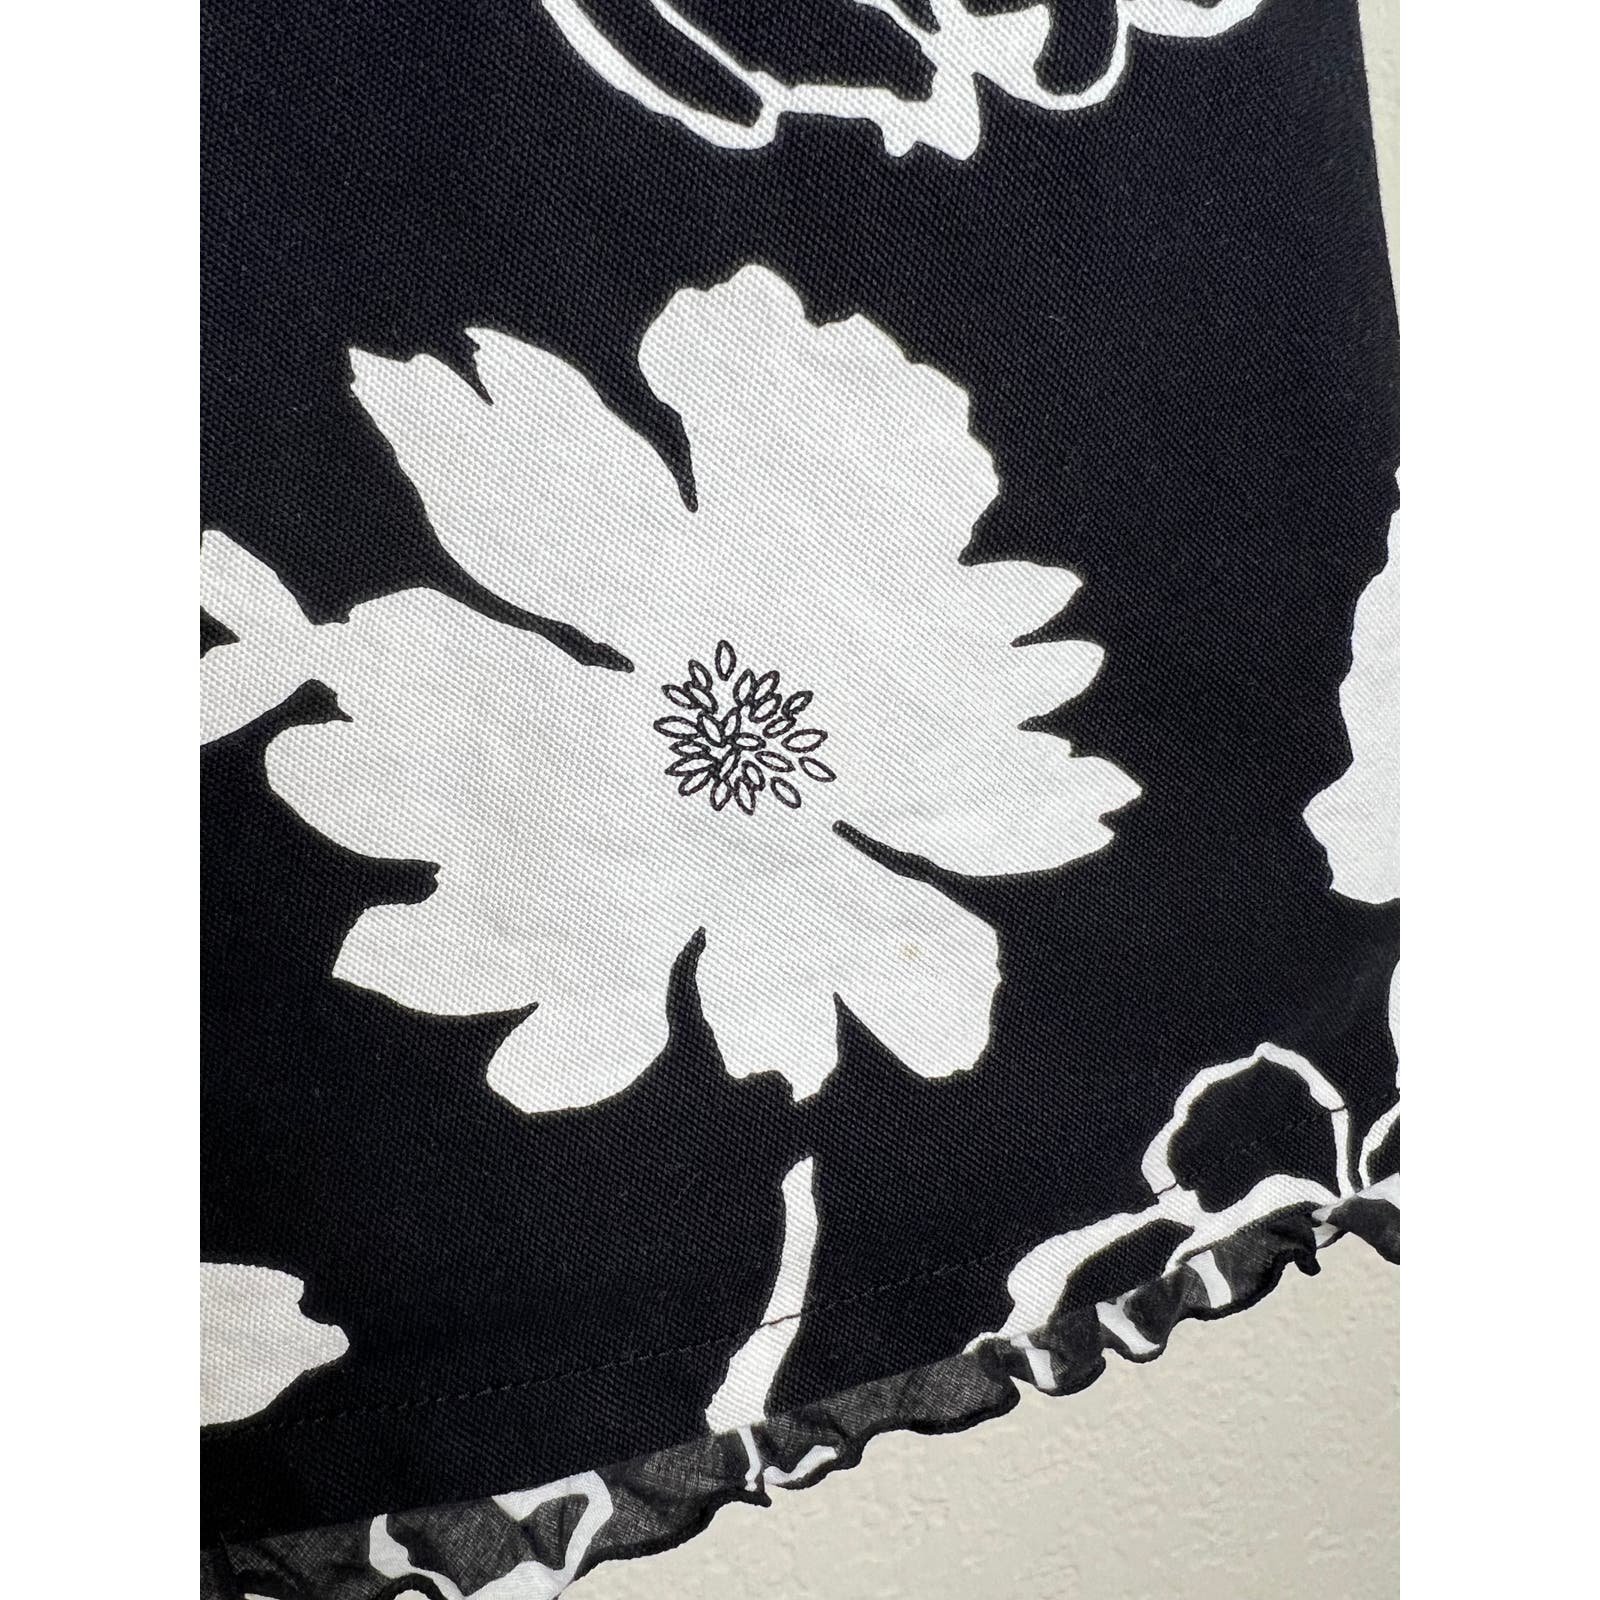 Comfortable Talbots Petites Women’s Black White Floral A-Line Skirt 4P FmtJsiF9k US Outlet